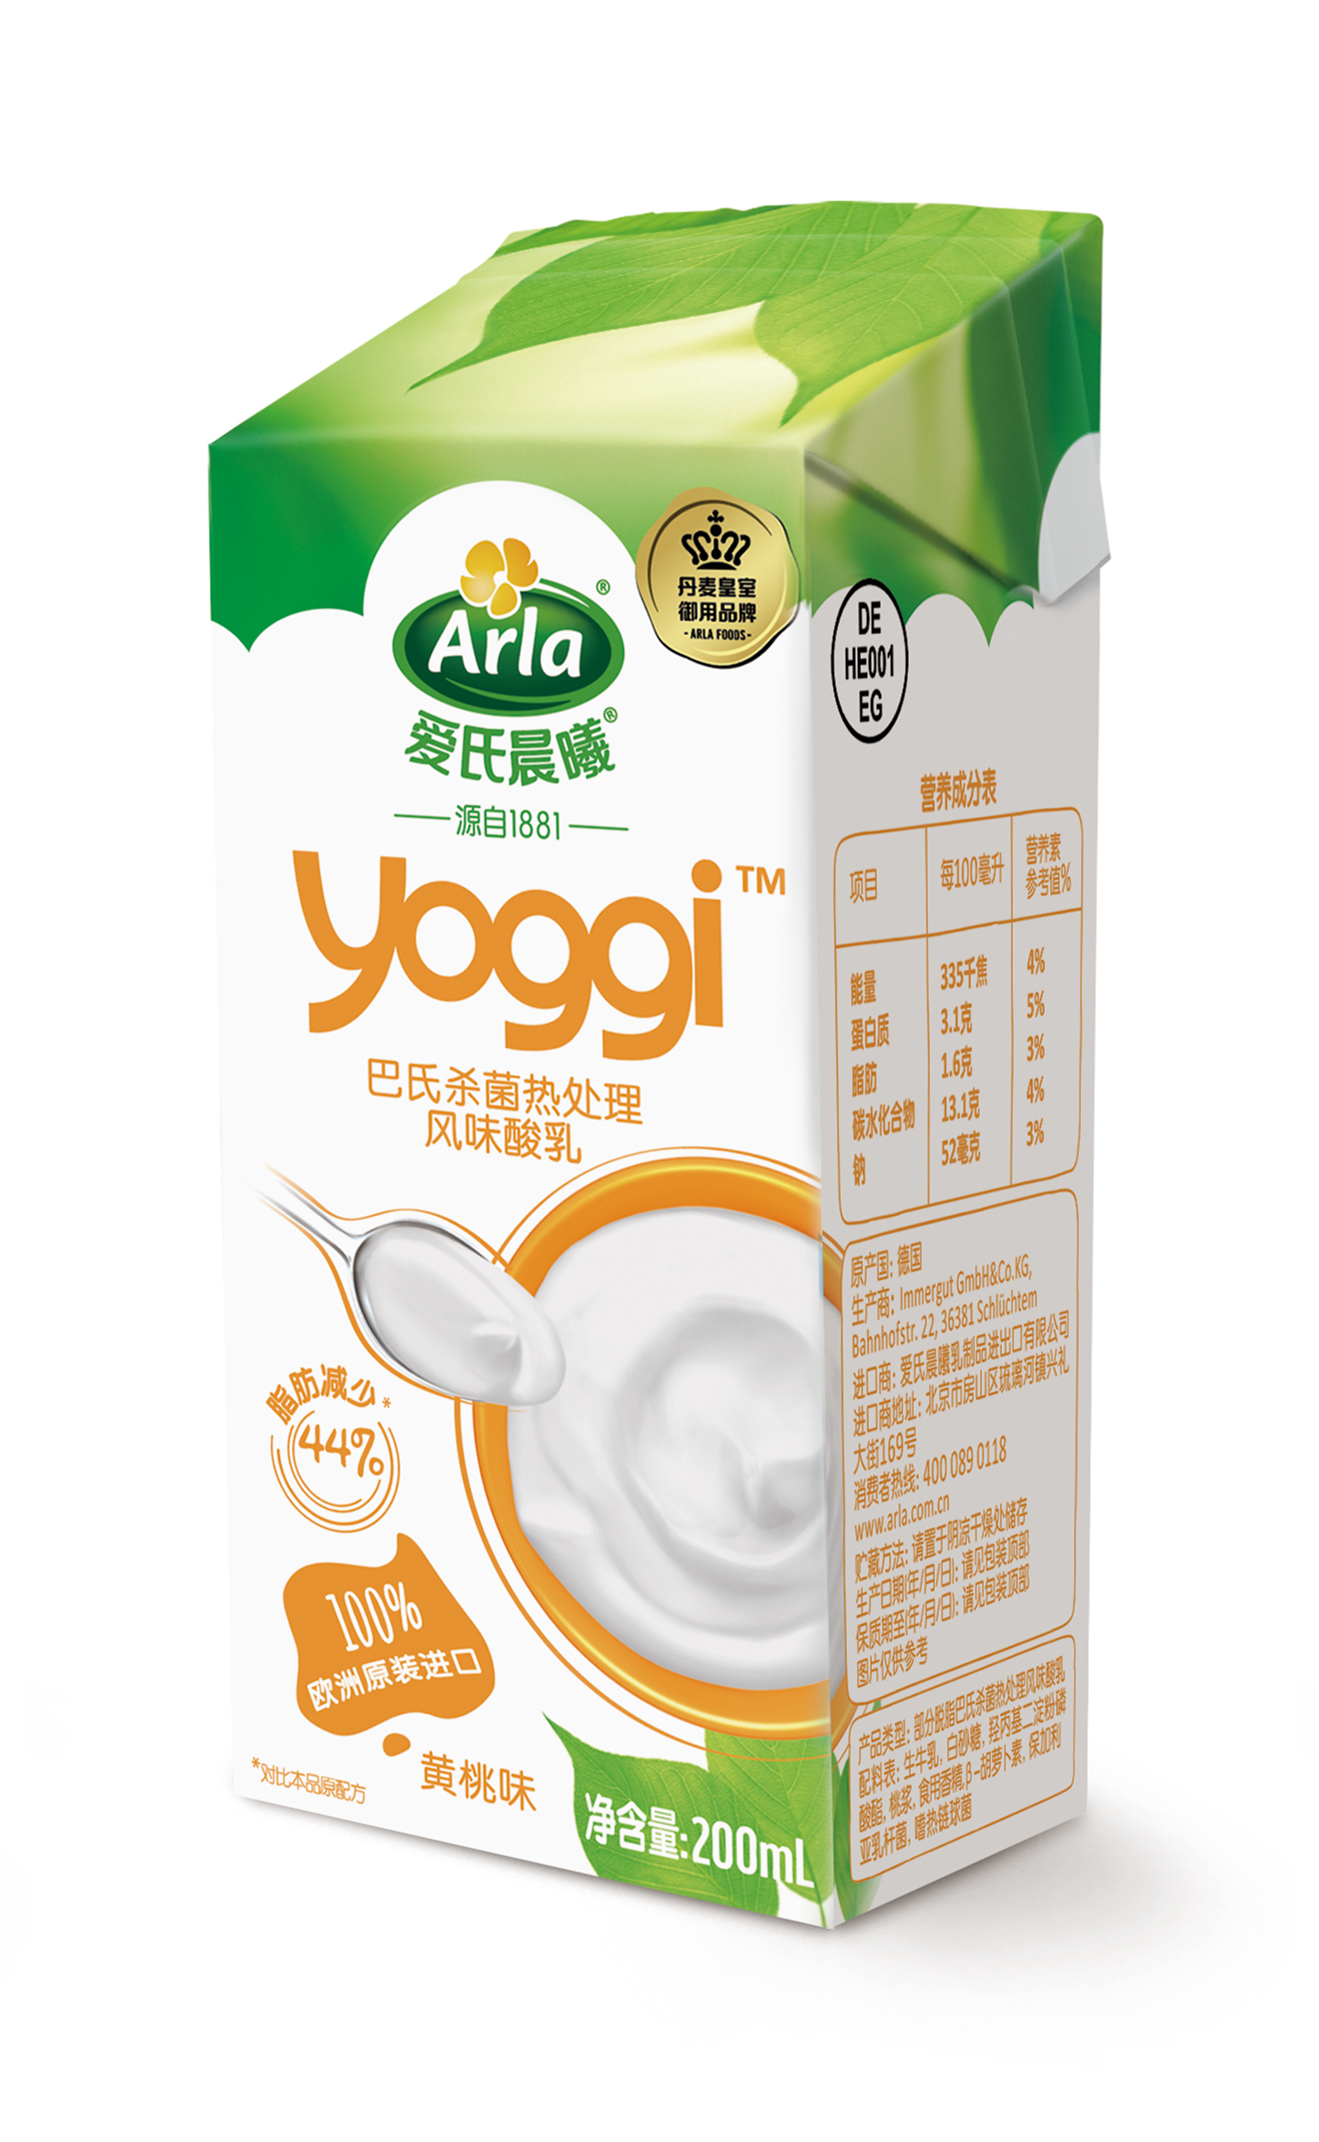 Arla ®爱氏晨曦 ™ Yoggi常温酸奶-黄桃味 200毫升